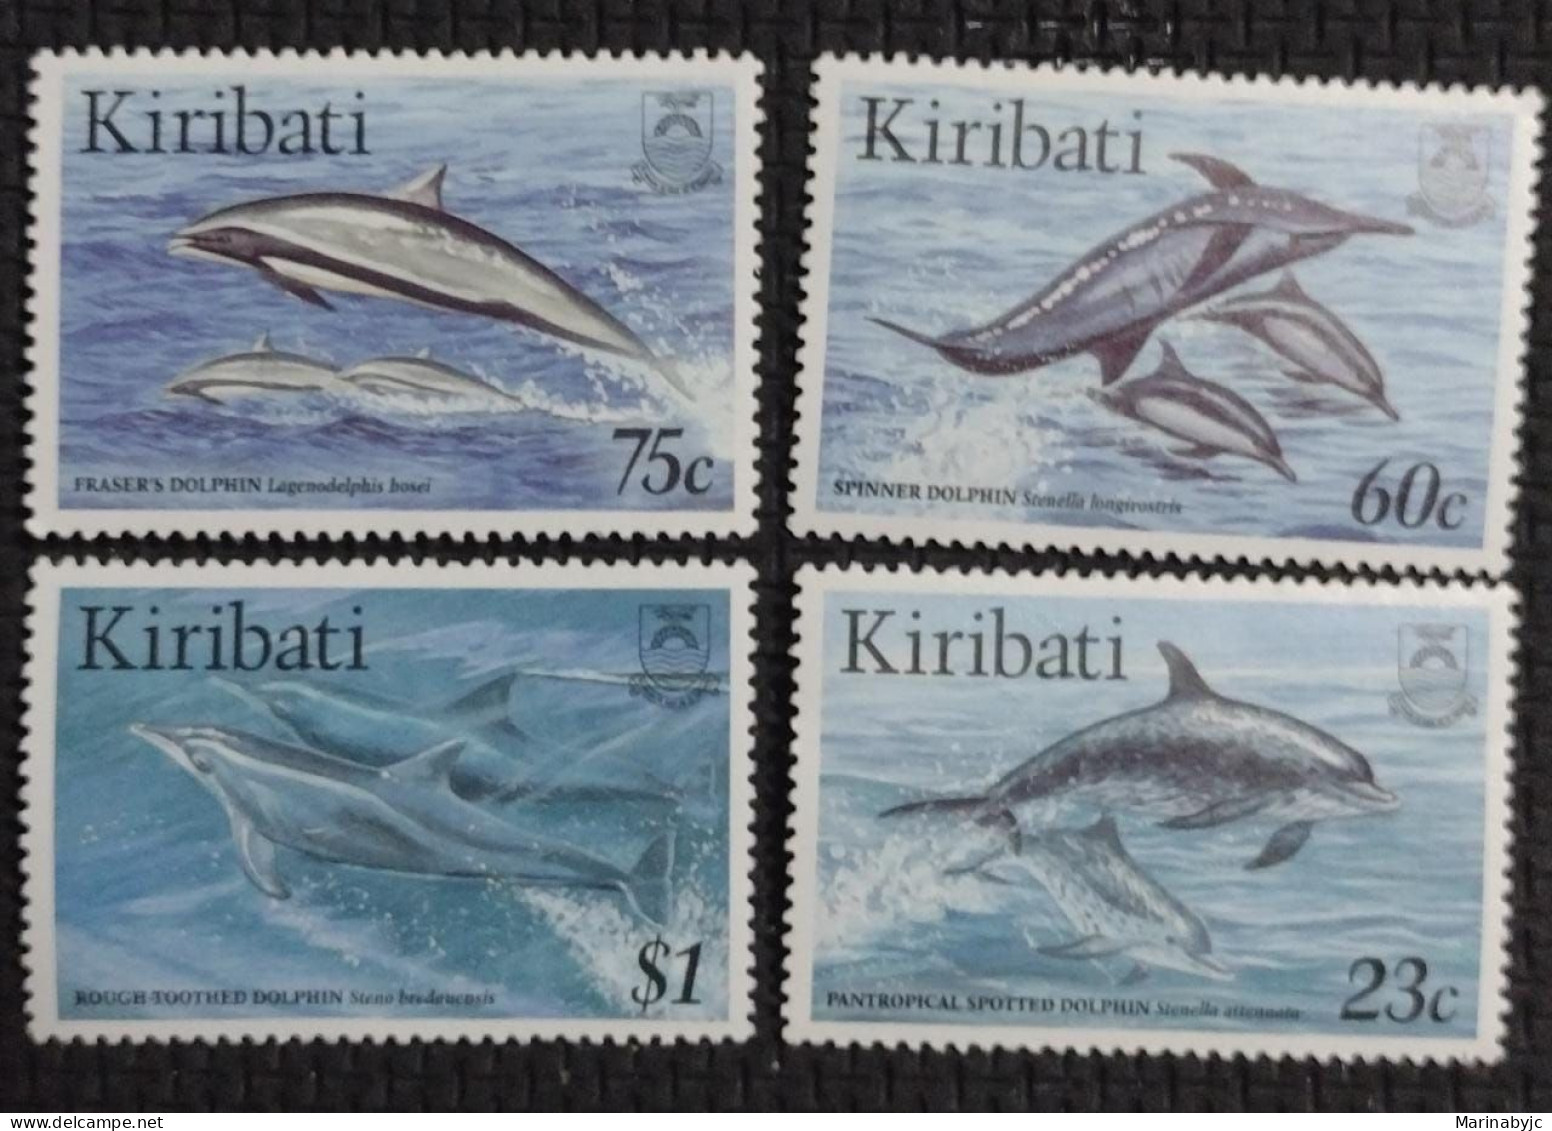 BD)1996. KIRIBATI, DOLPHINS, FRASER'S, ACROBAT, NARROW SNOUT, TROPICAL SPOTTED, MNH - Kiribati